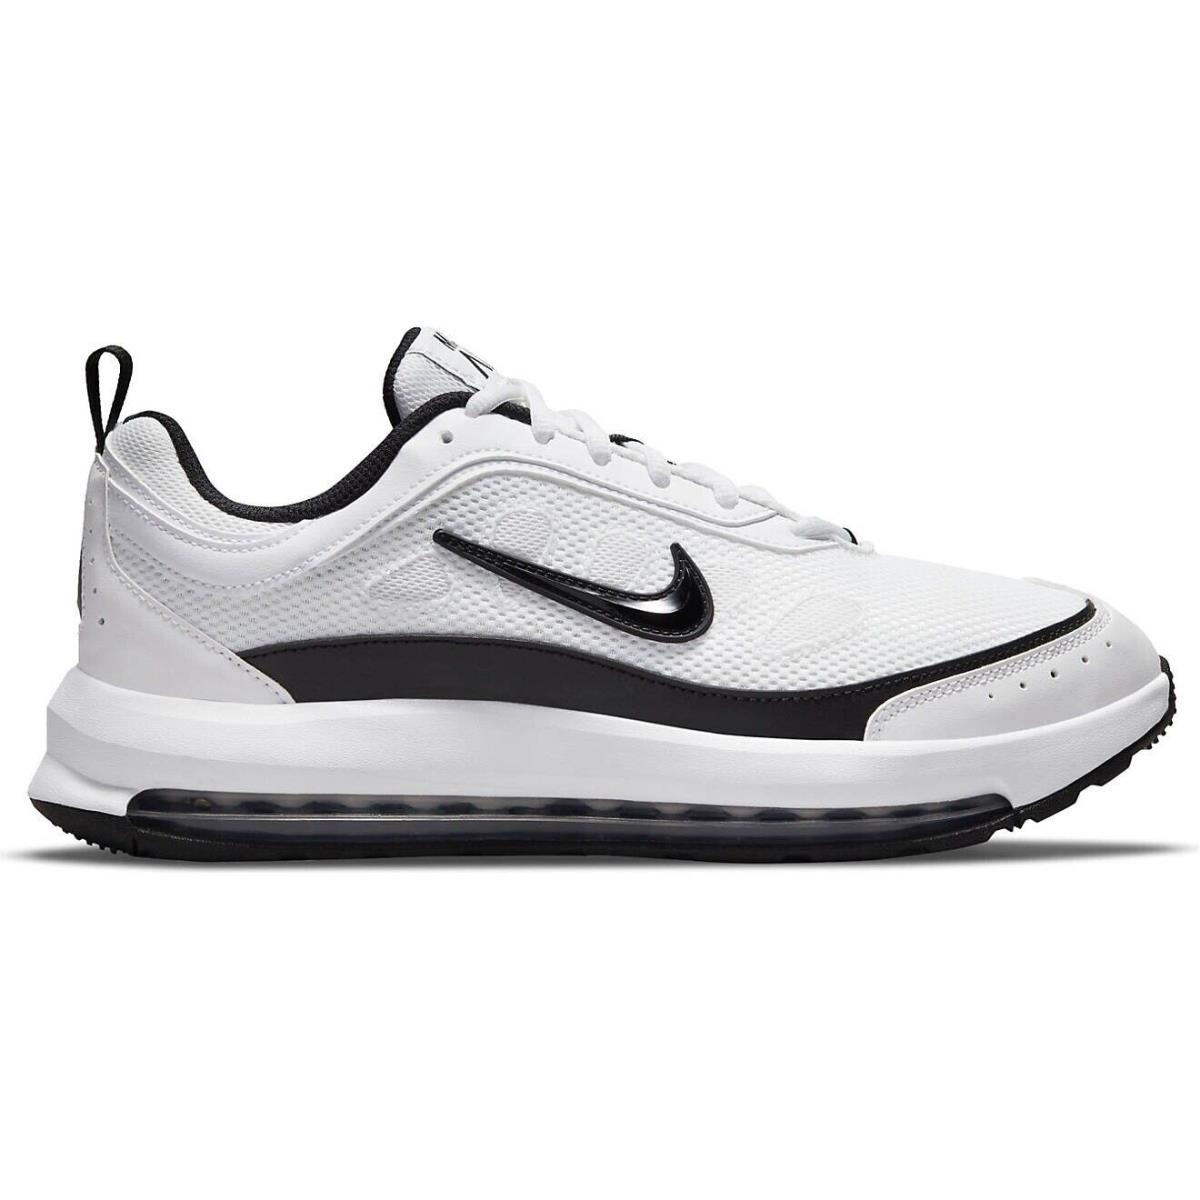 Men Nike Air Max AP Running Shoes Sneakers Size 10.5 White Black CU4826 100